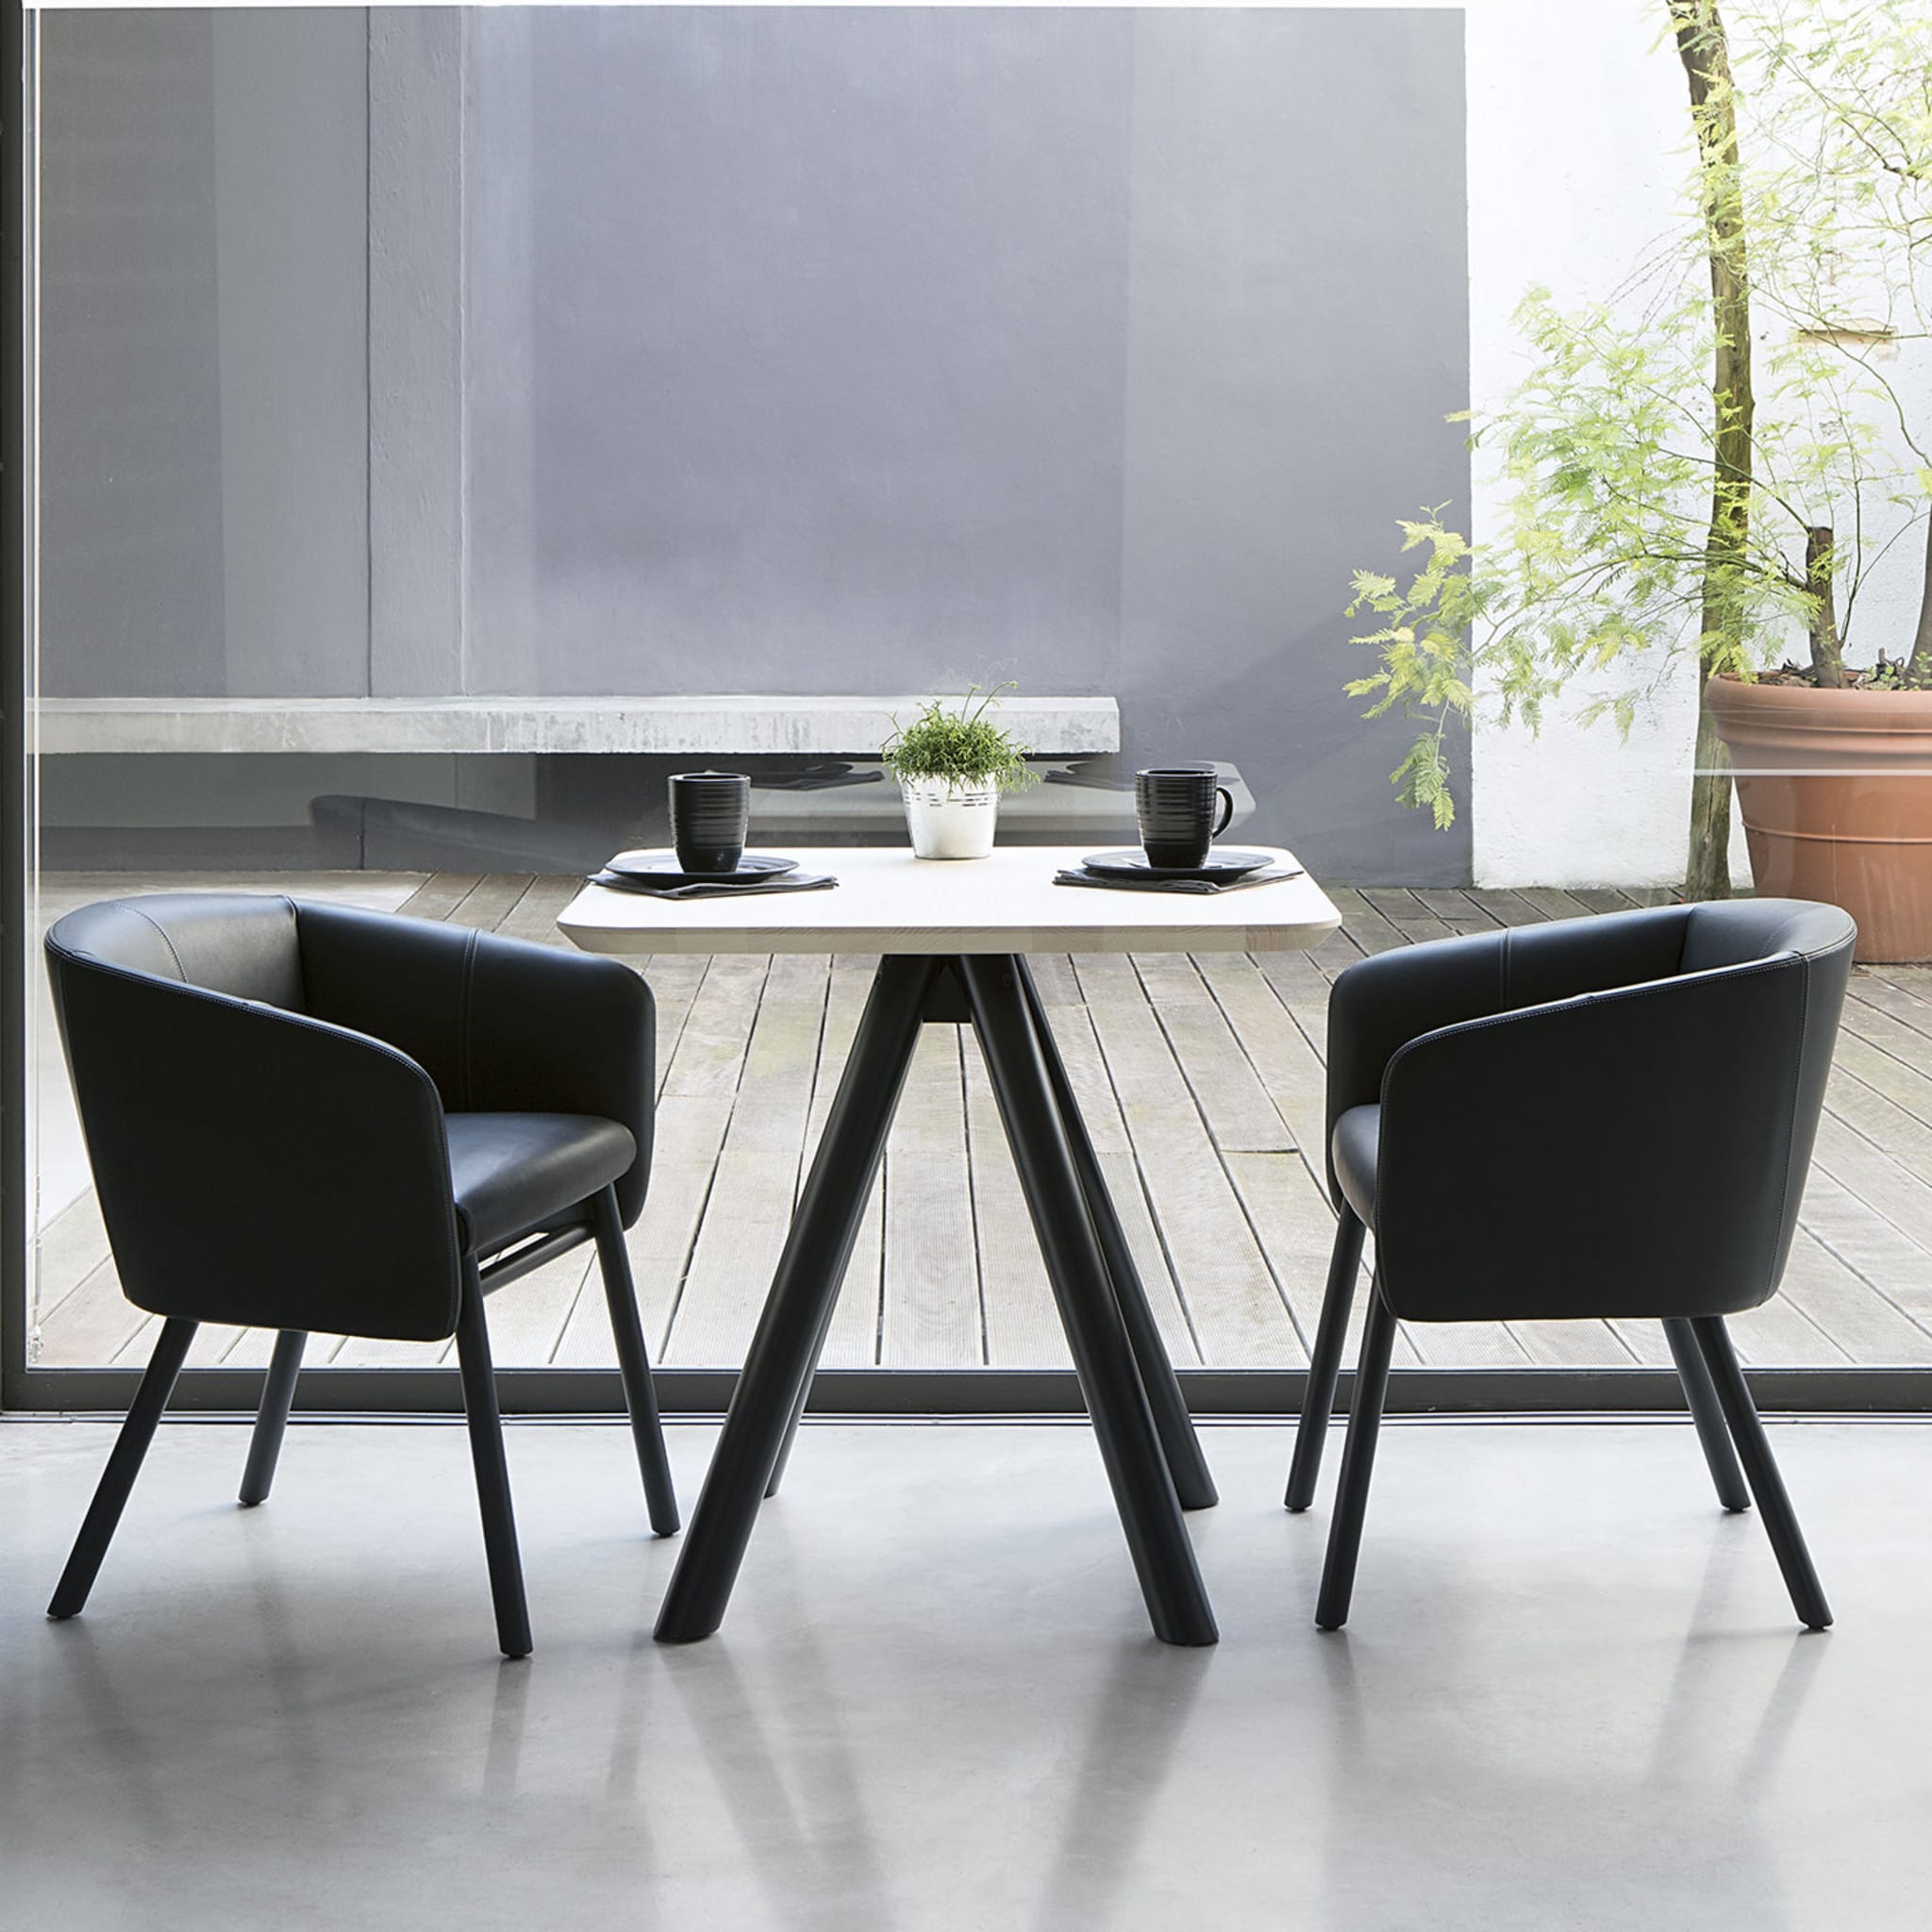 Balù Black Leather Chair By Emilio Nanni - Alternative view 4